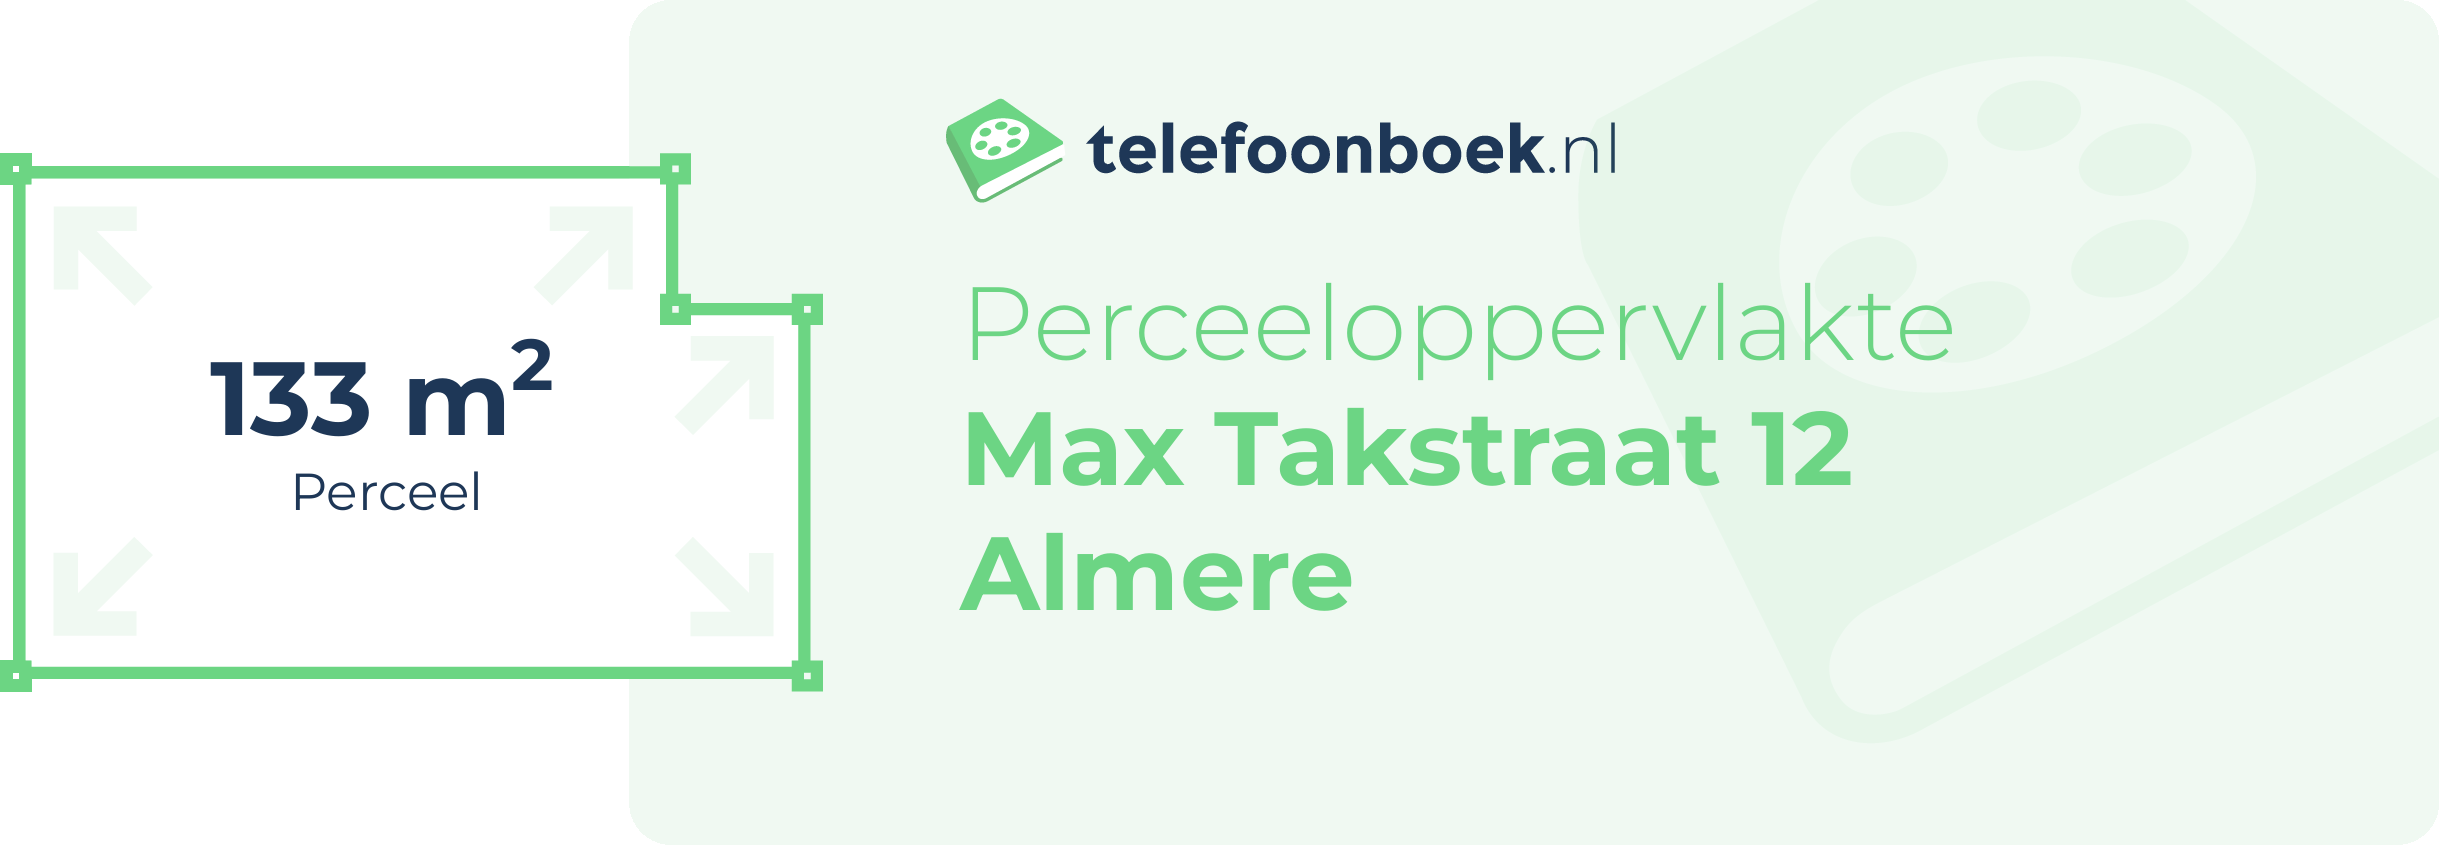 Perceeloppervlakte Max Takstraat 12 Almere